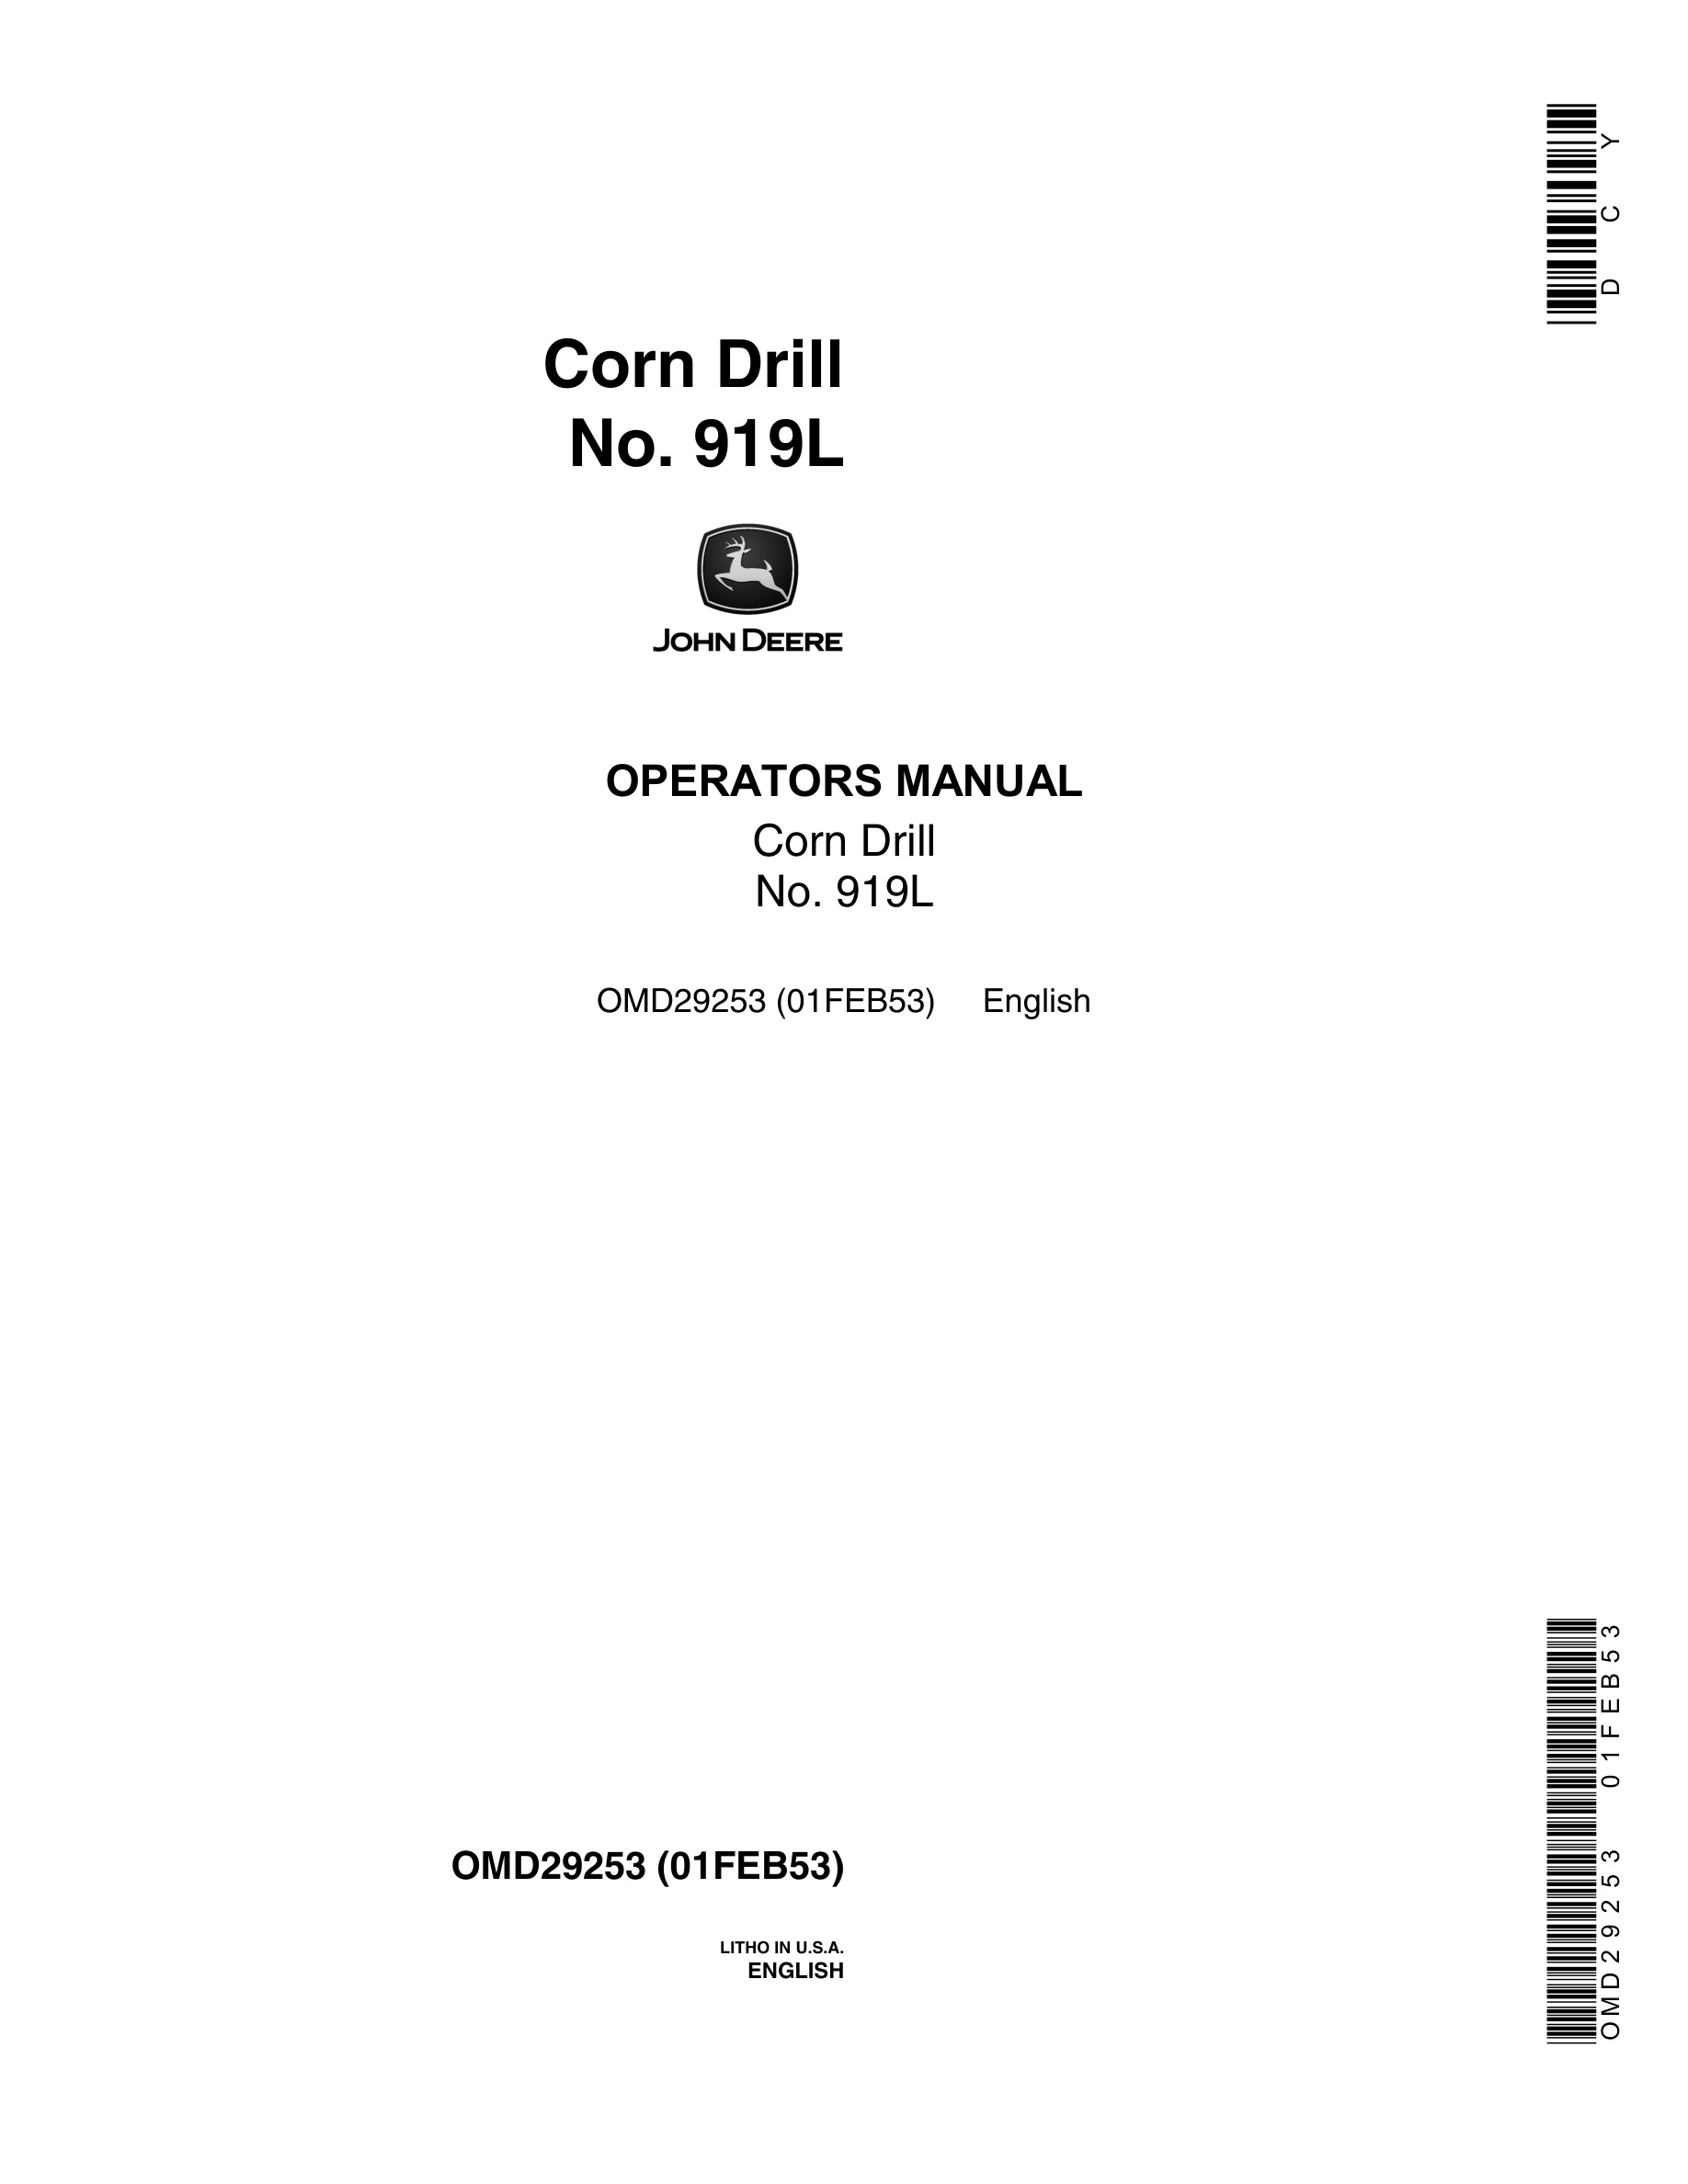 John Deere No. 919L Corn Drill Operator Manual OMD29253-1